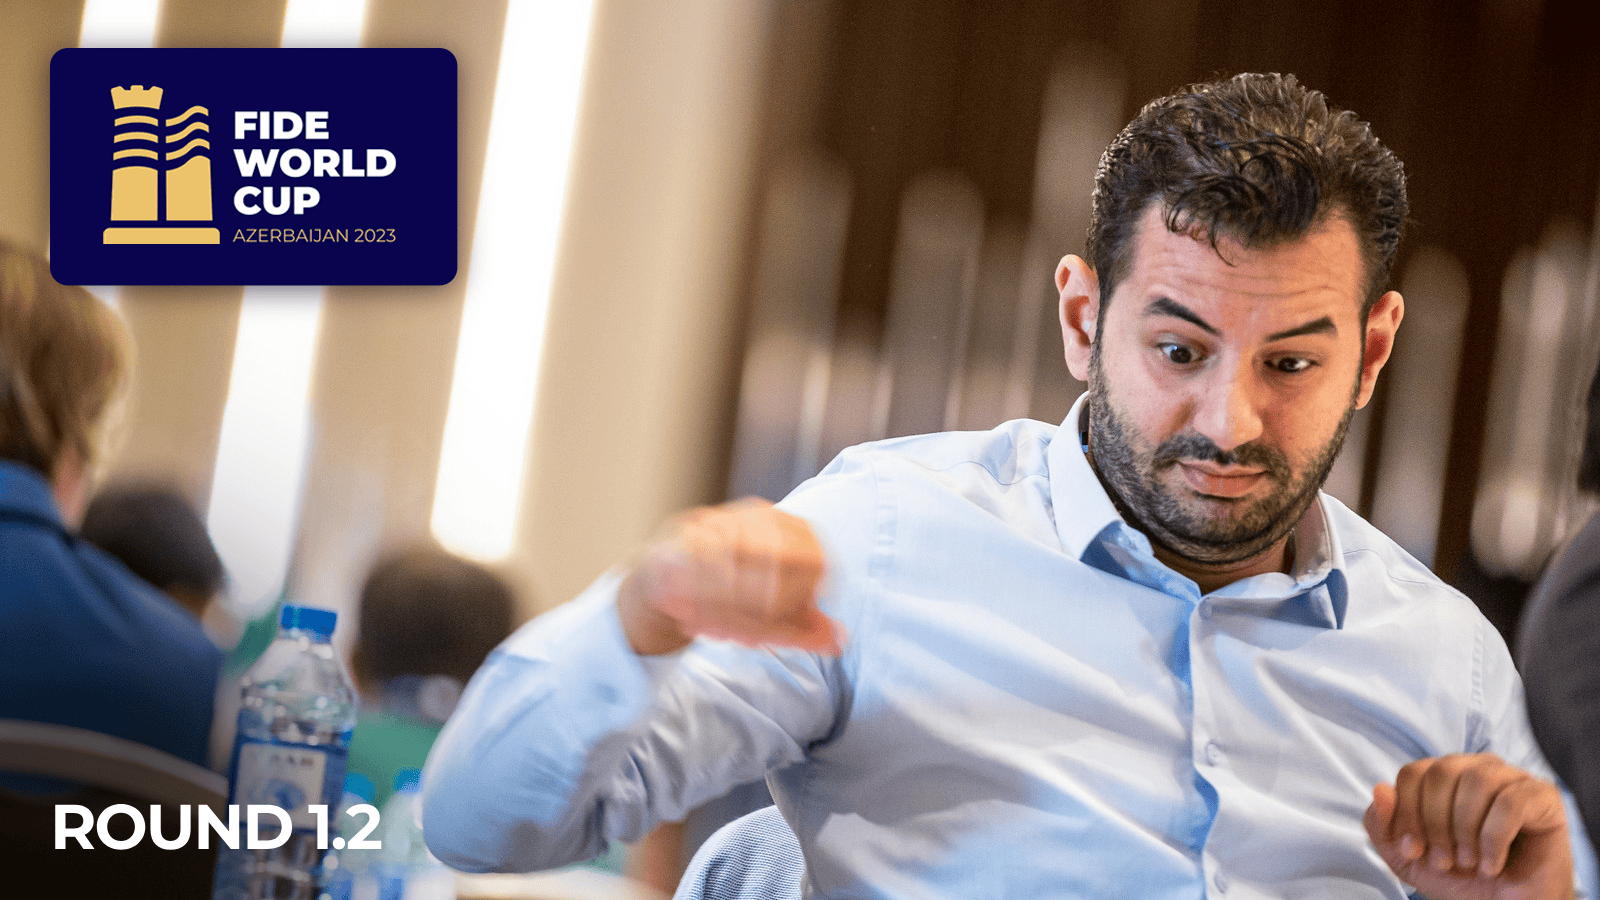 FIDE World Cup 1.1: The battle begins